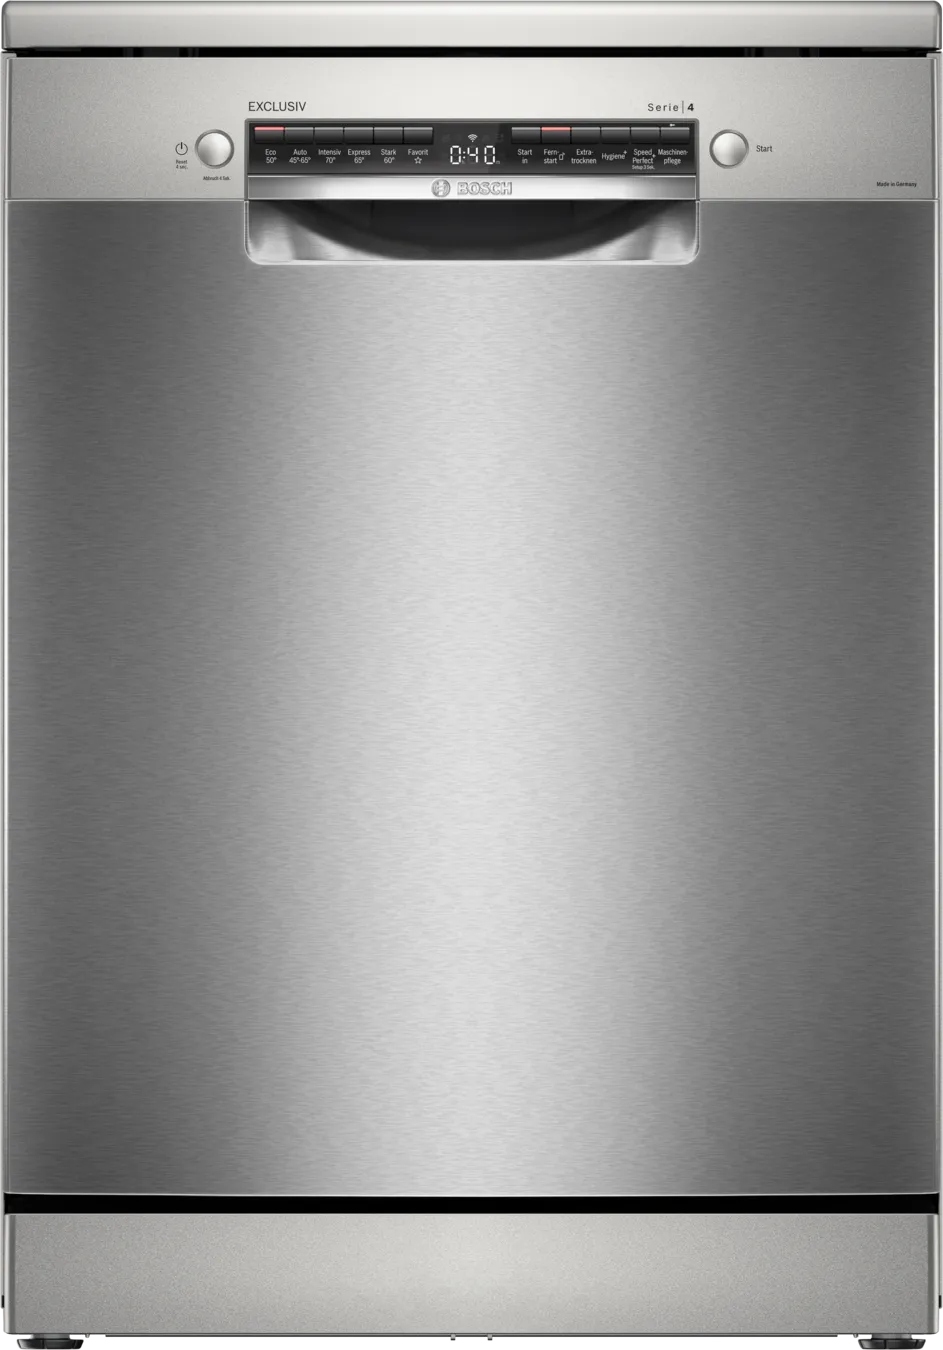 ماشین ظرفشویی بوش مدل SMS4HBI01D